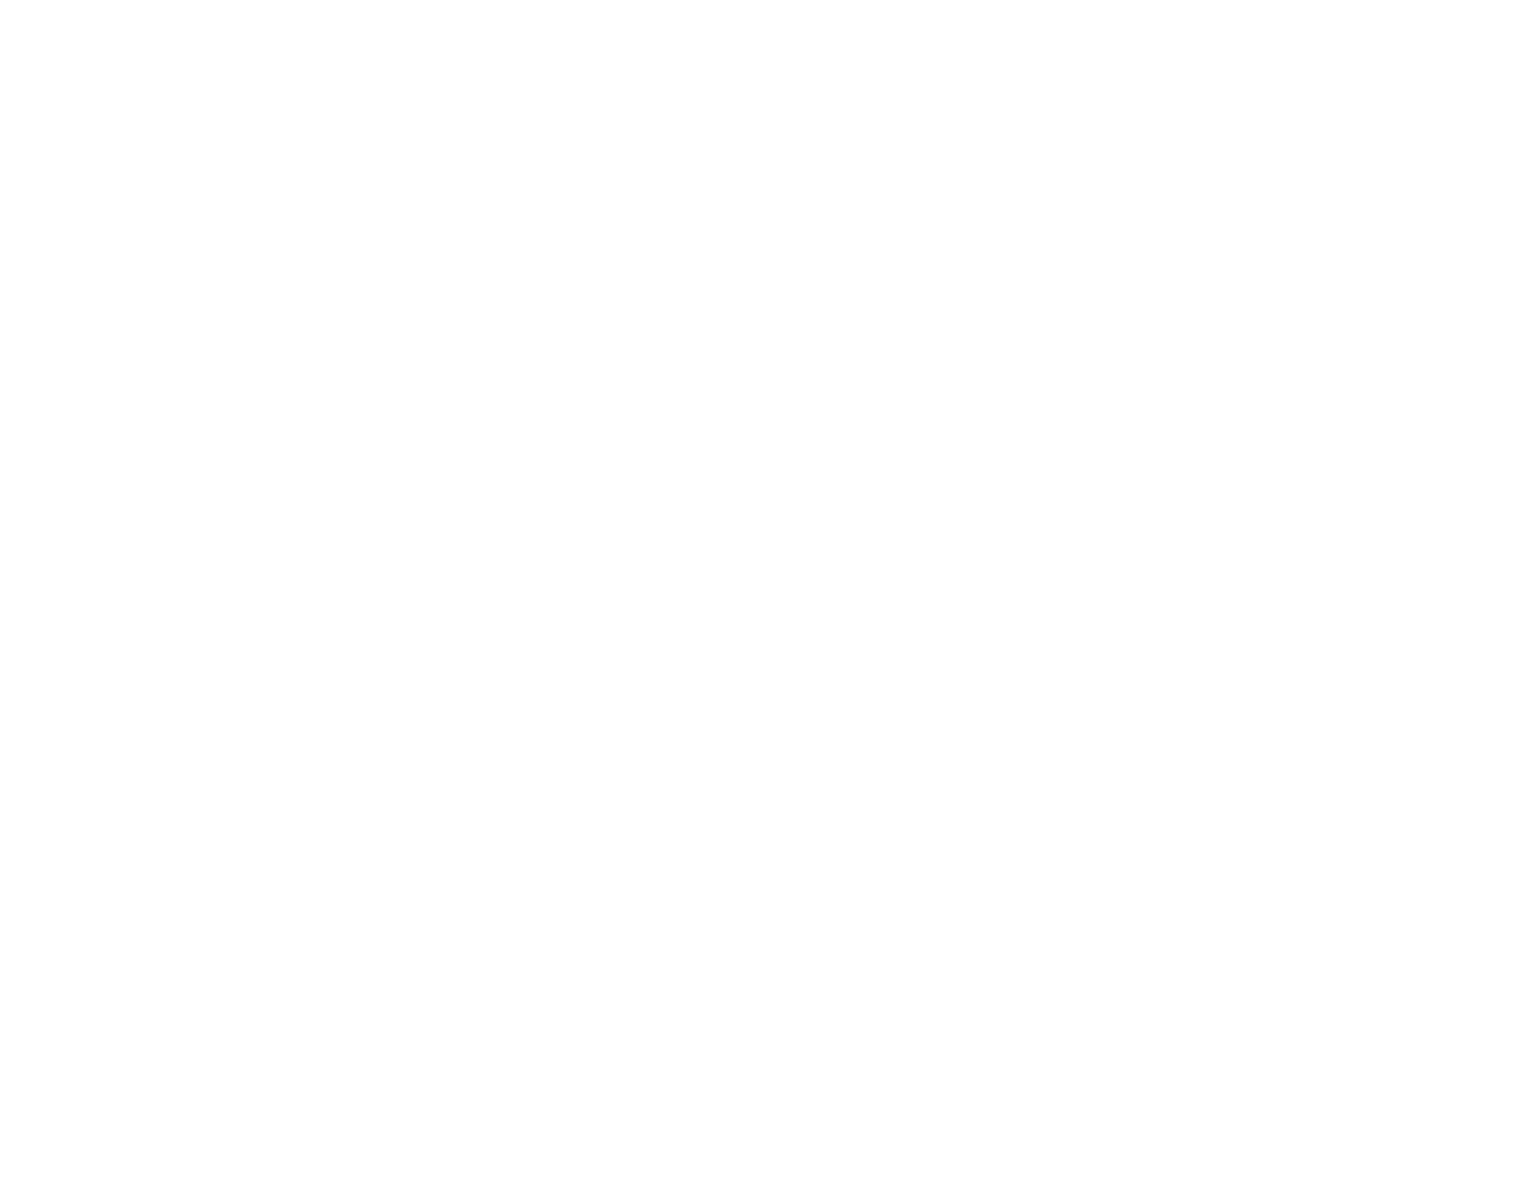 QuidelOrtho logo for dark backgrounds (transparent PNG)